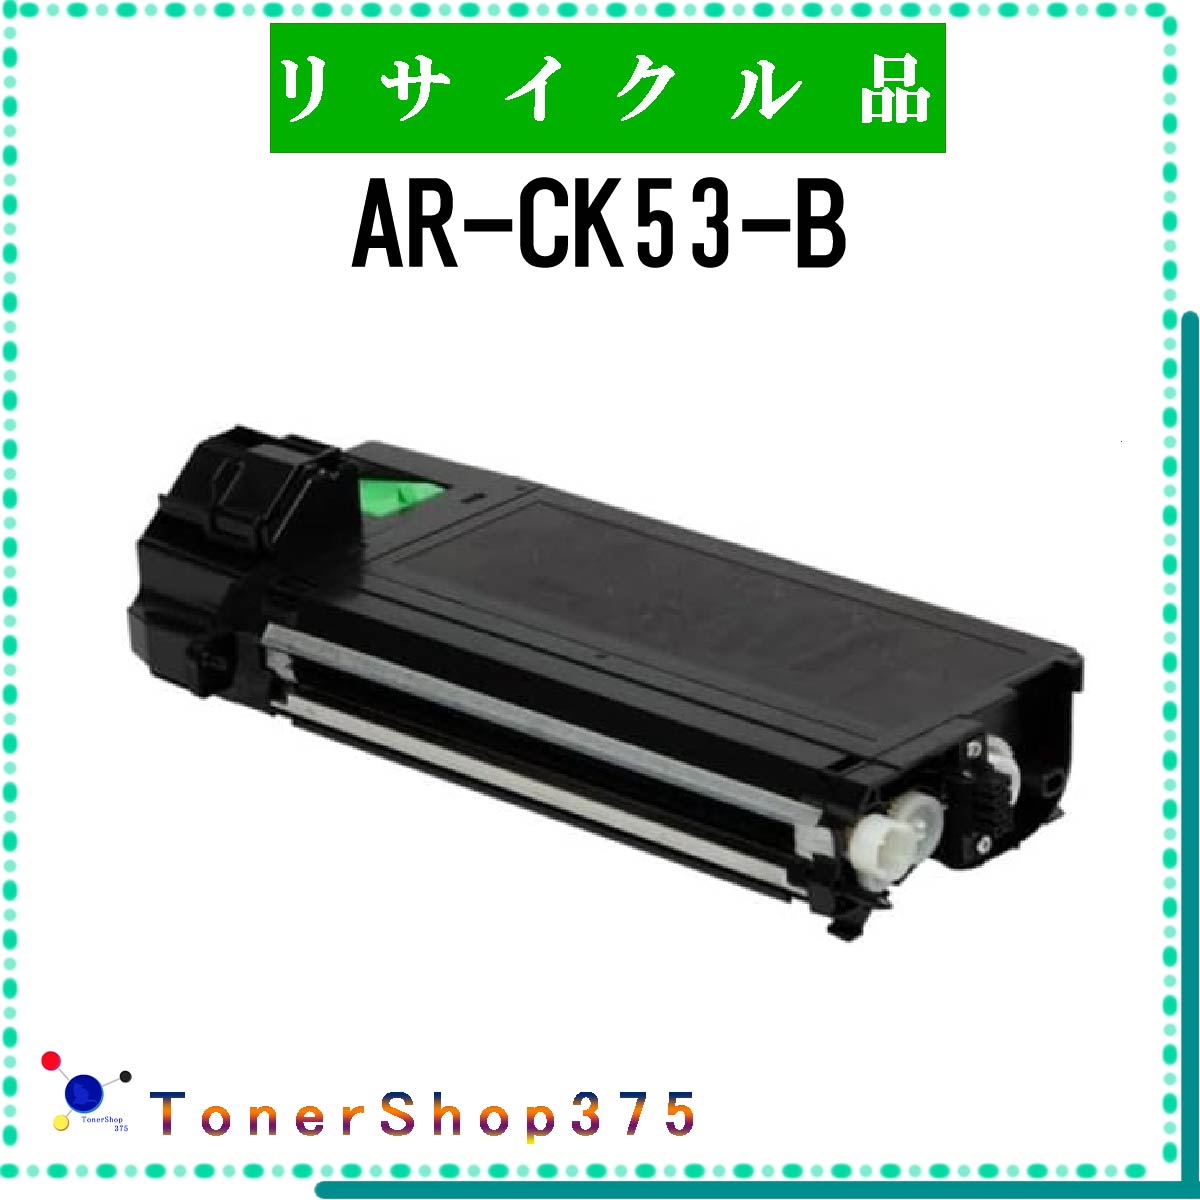 SHARP 【 AR-CK53-B 】 リサイクル トナー 国内有名リサイクル工場より直送 お預かり再生 シャープ